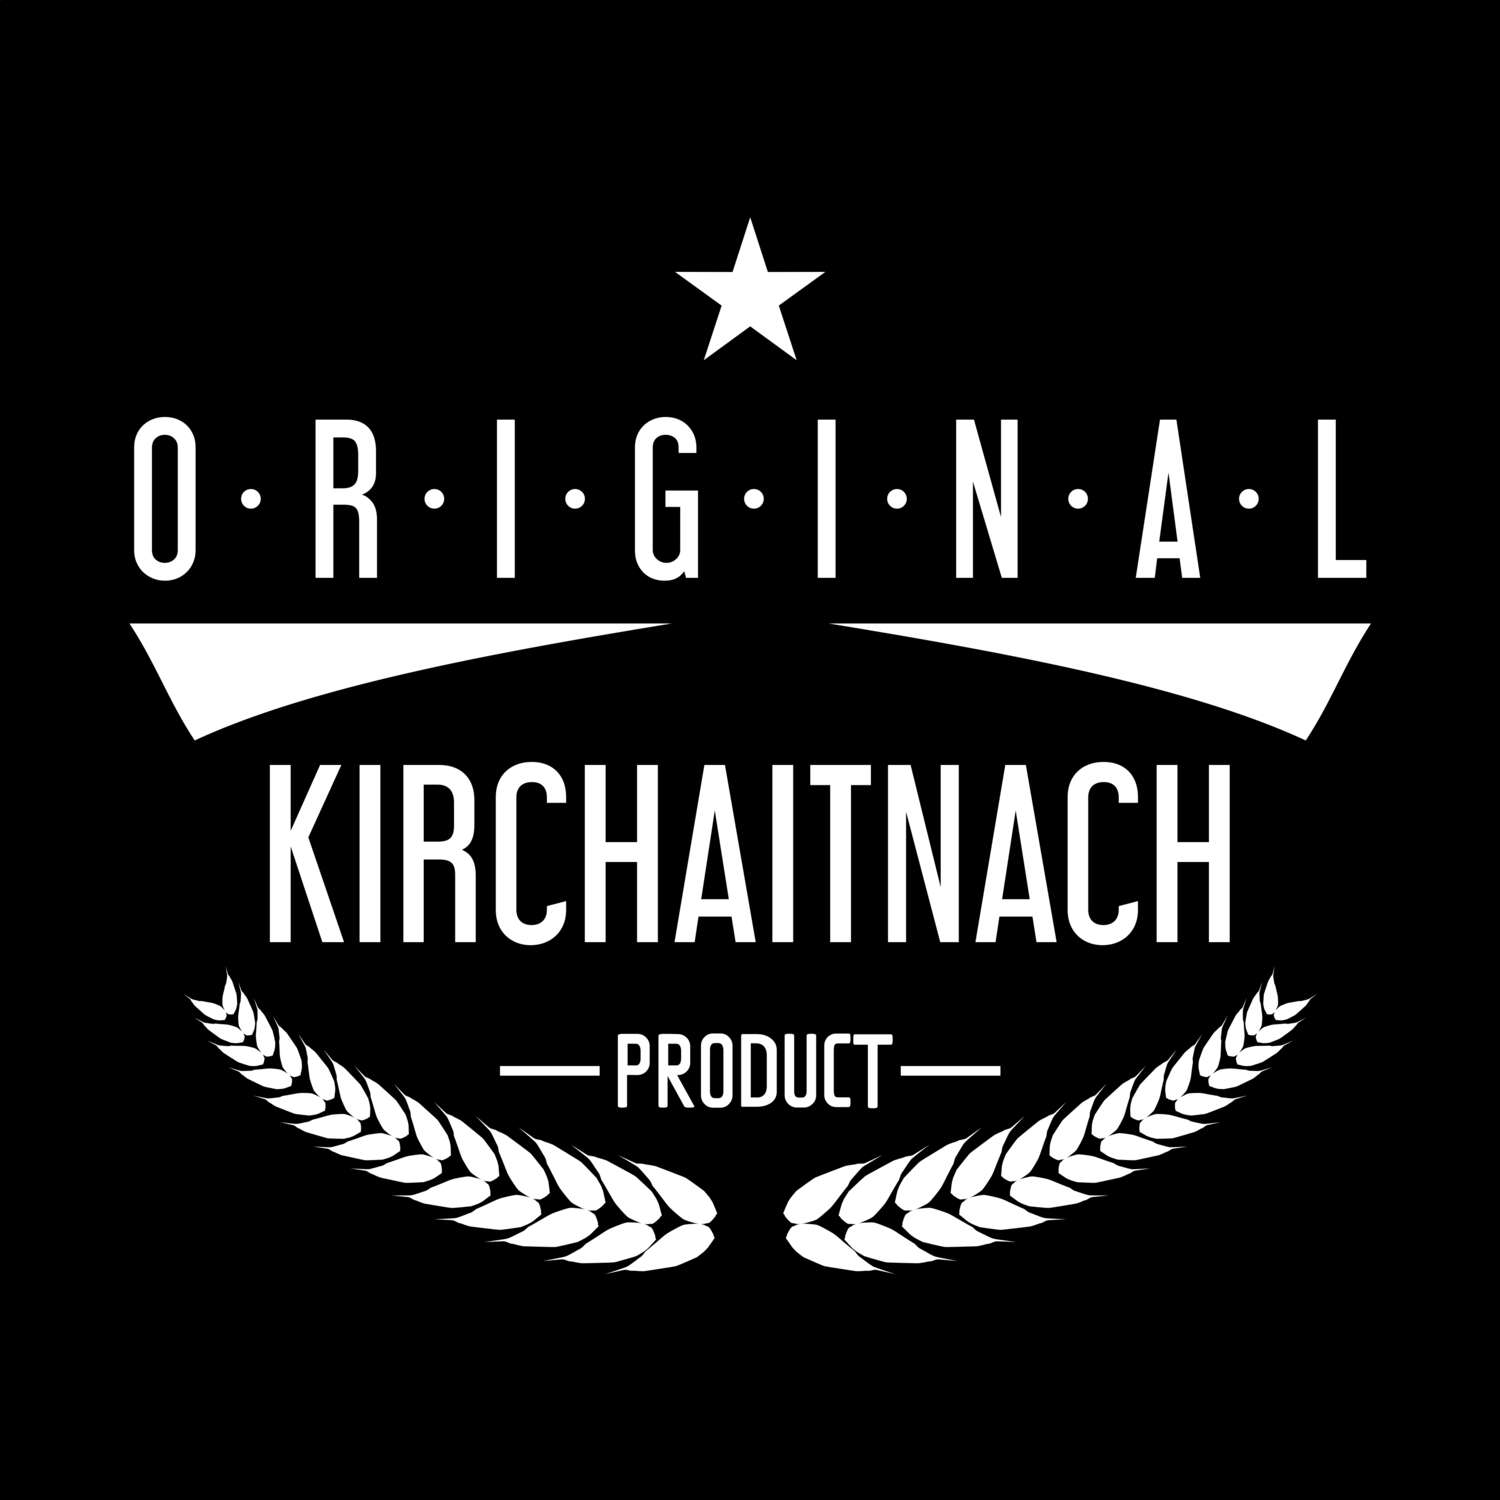 Kirchaitnach T-Shirt »Original Product«